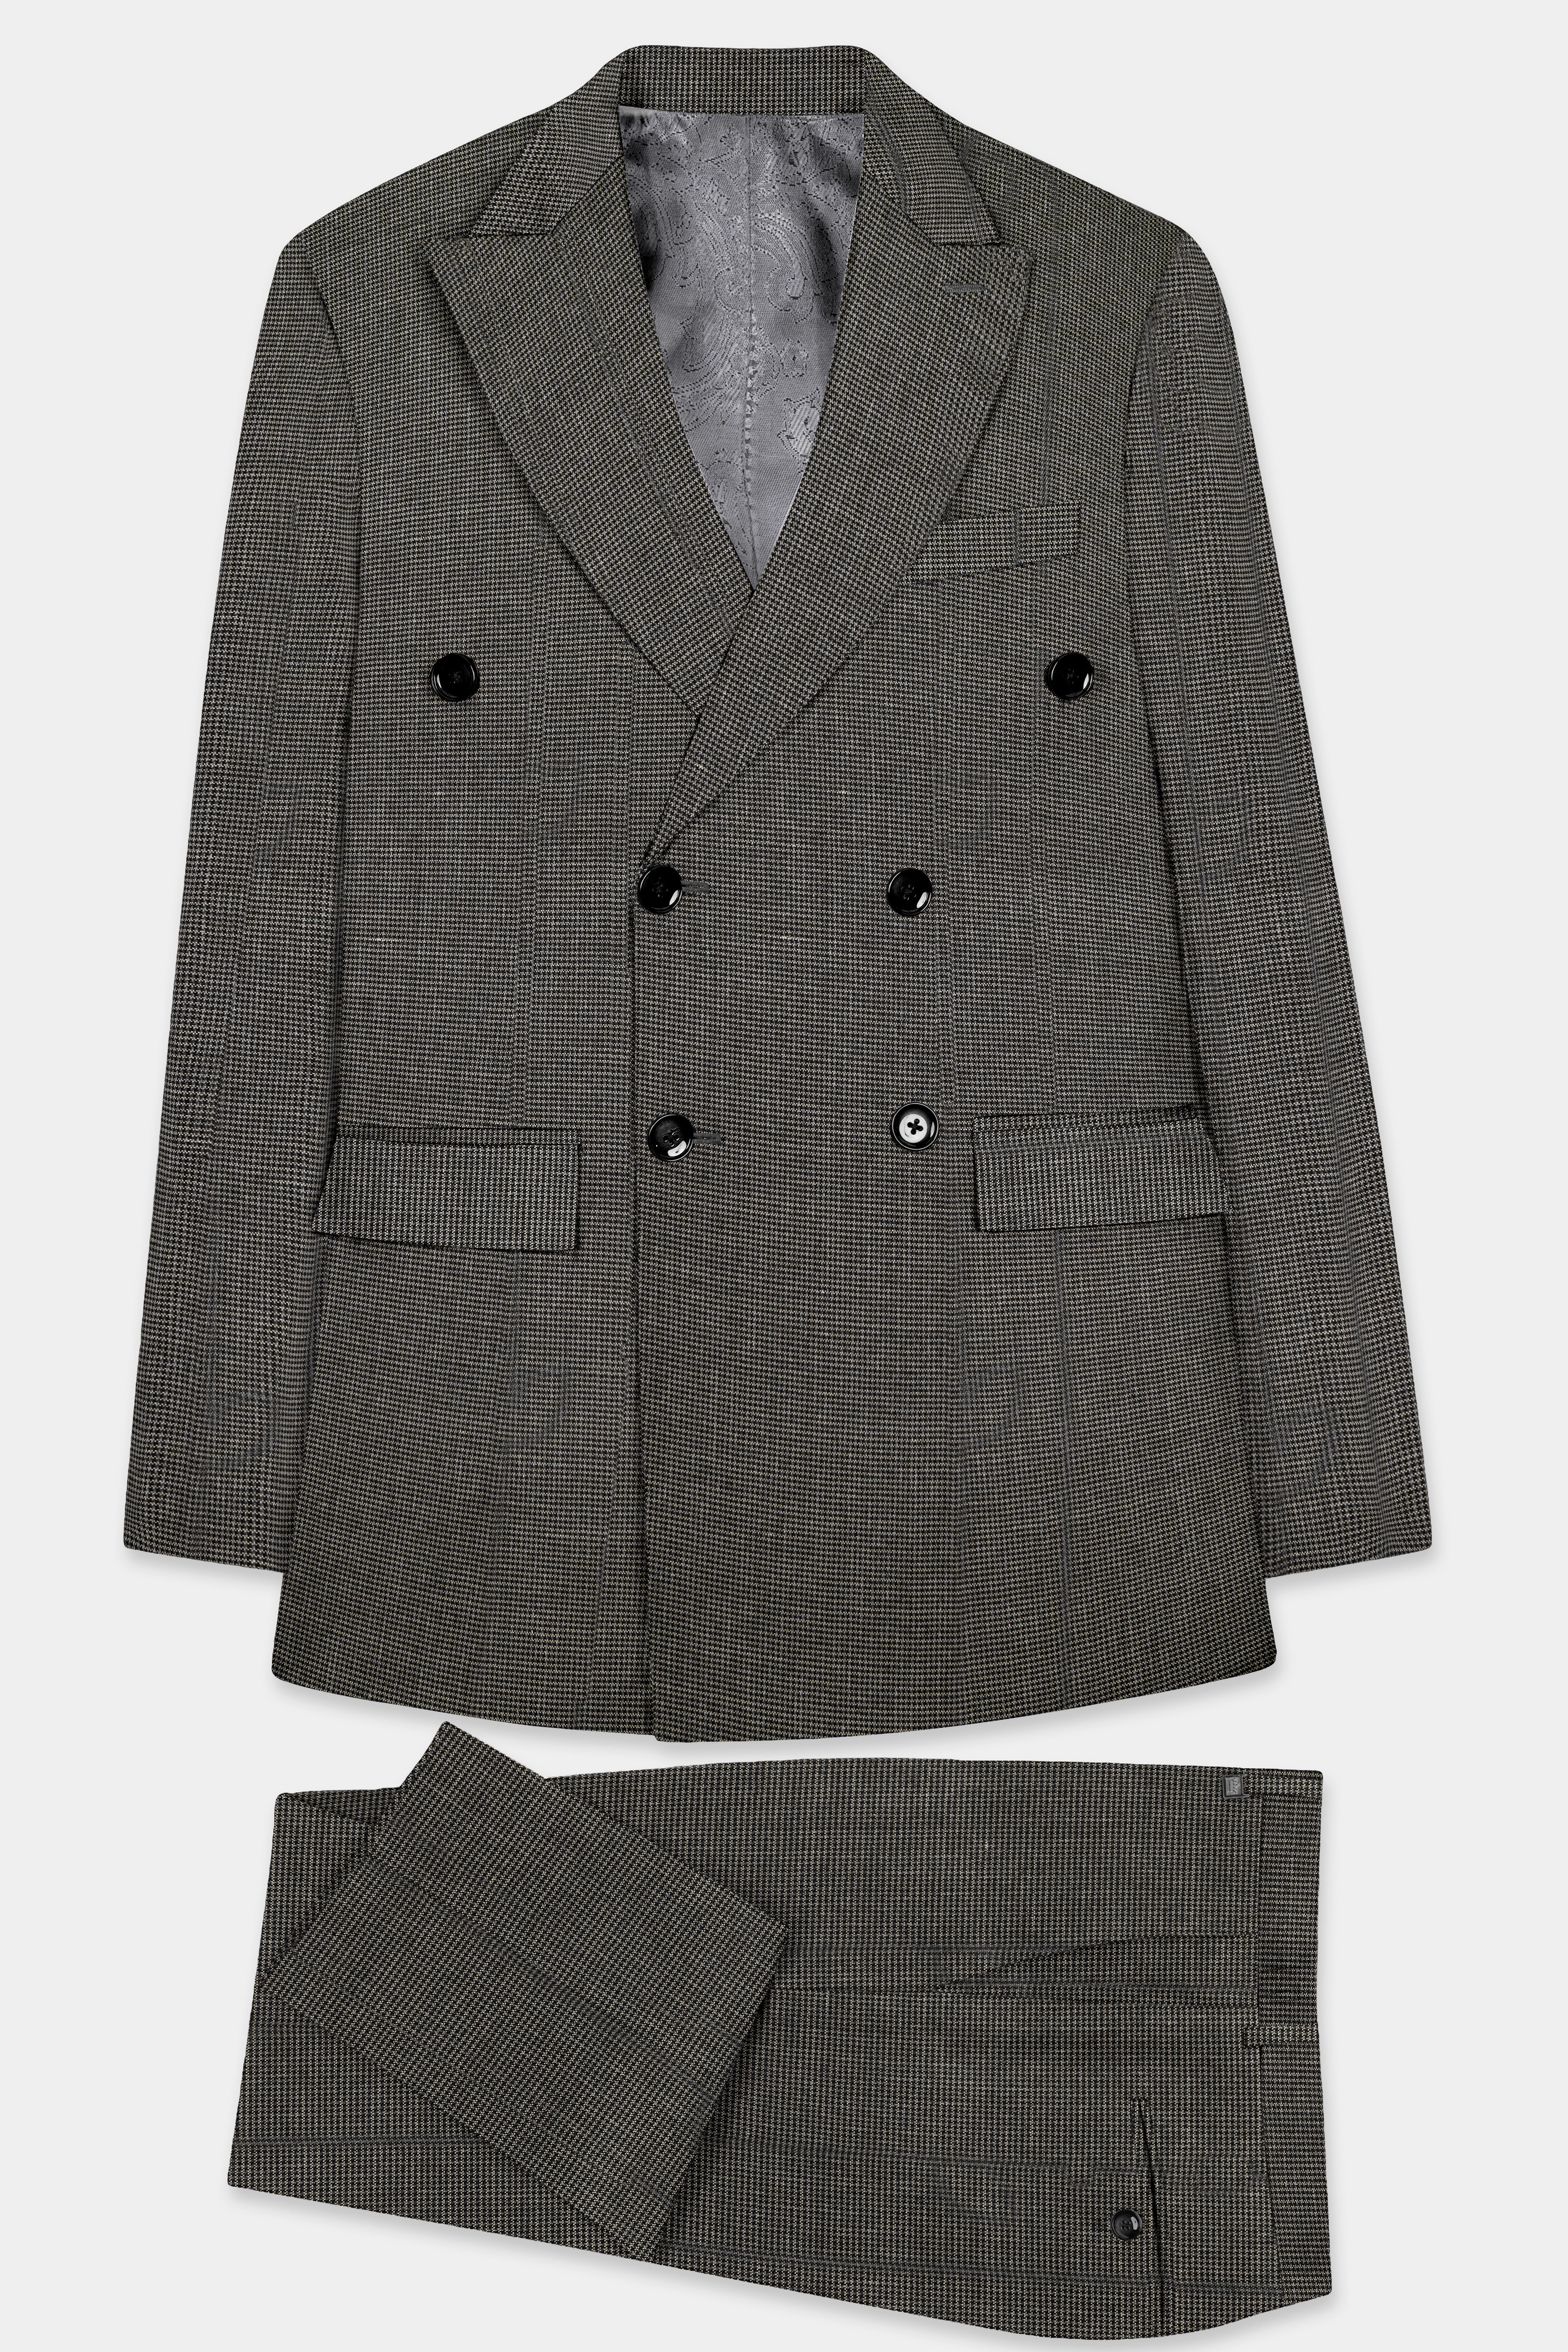 Iridium Gray Wool Rice Double Breasted Suit